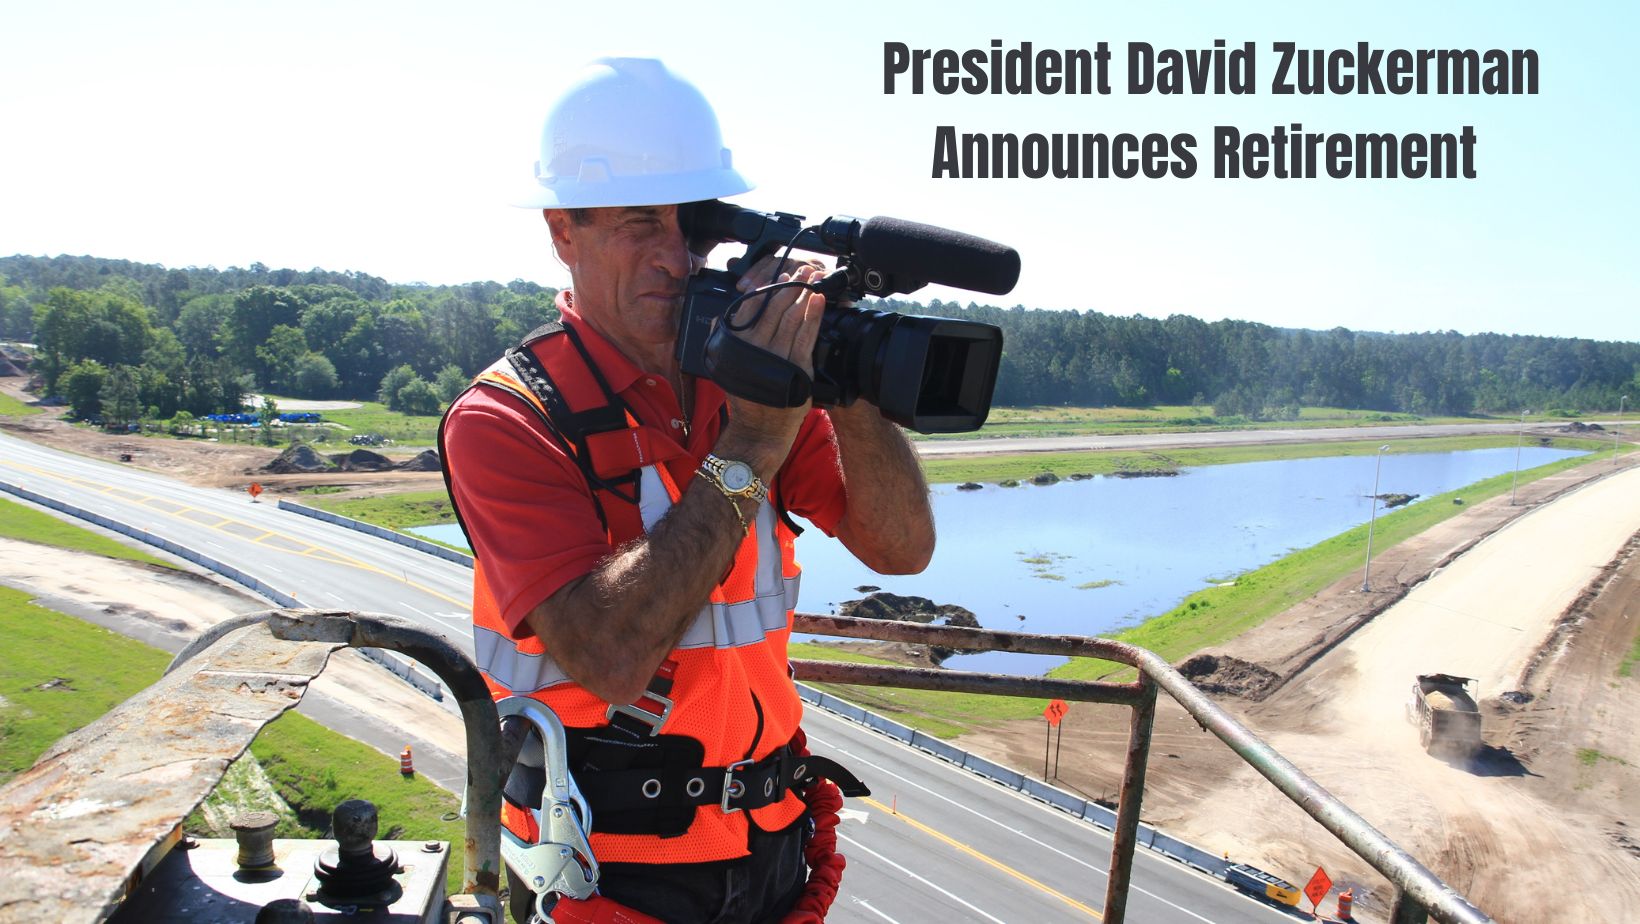 Easy Edit Video owner and President David Zuckerman announces retirement.